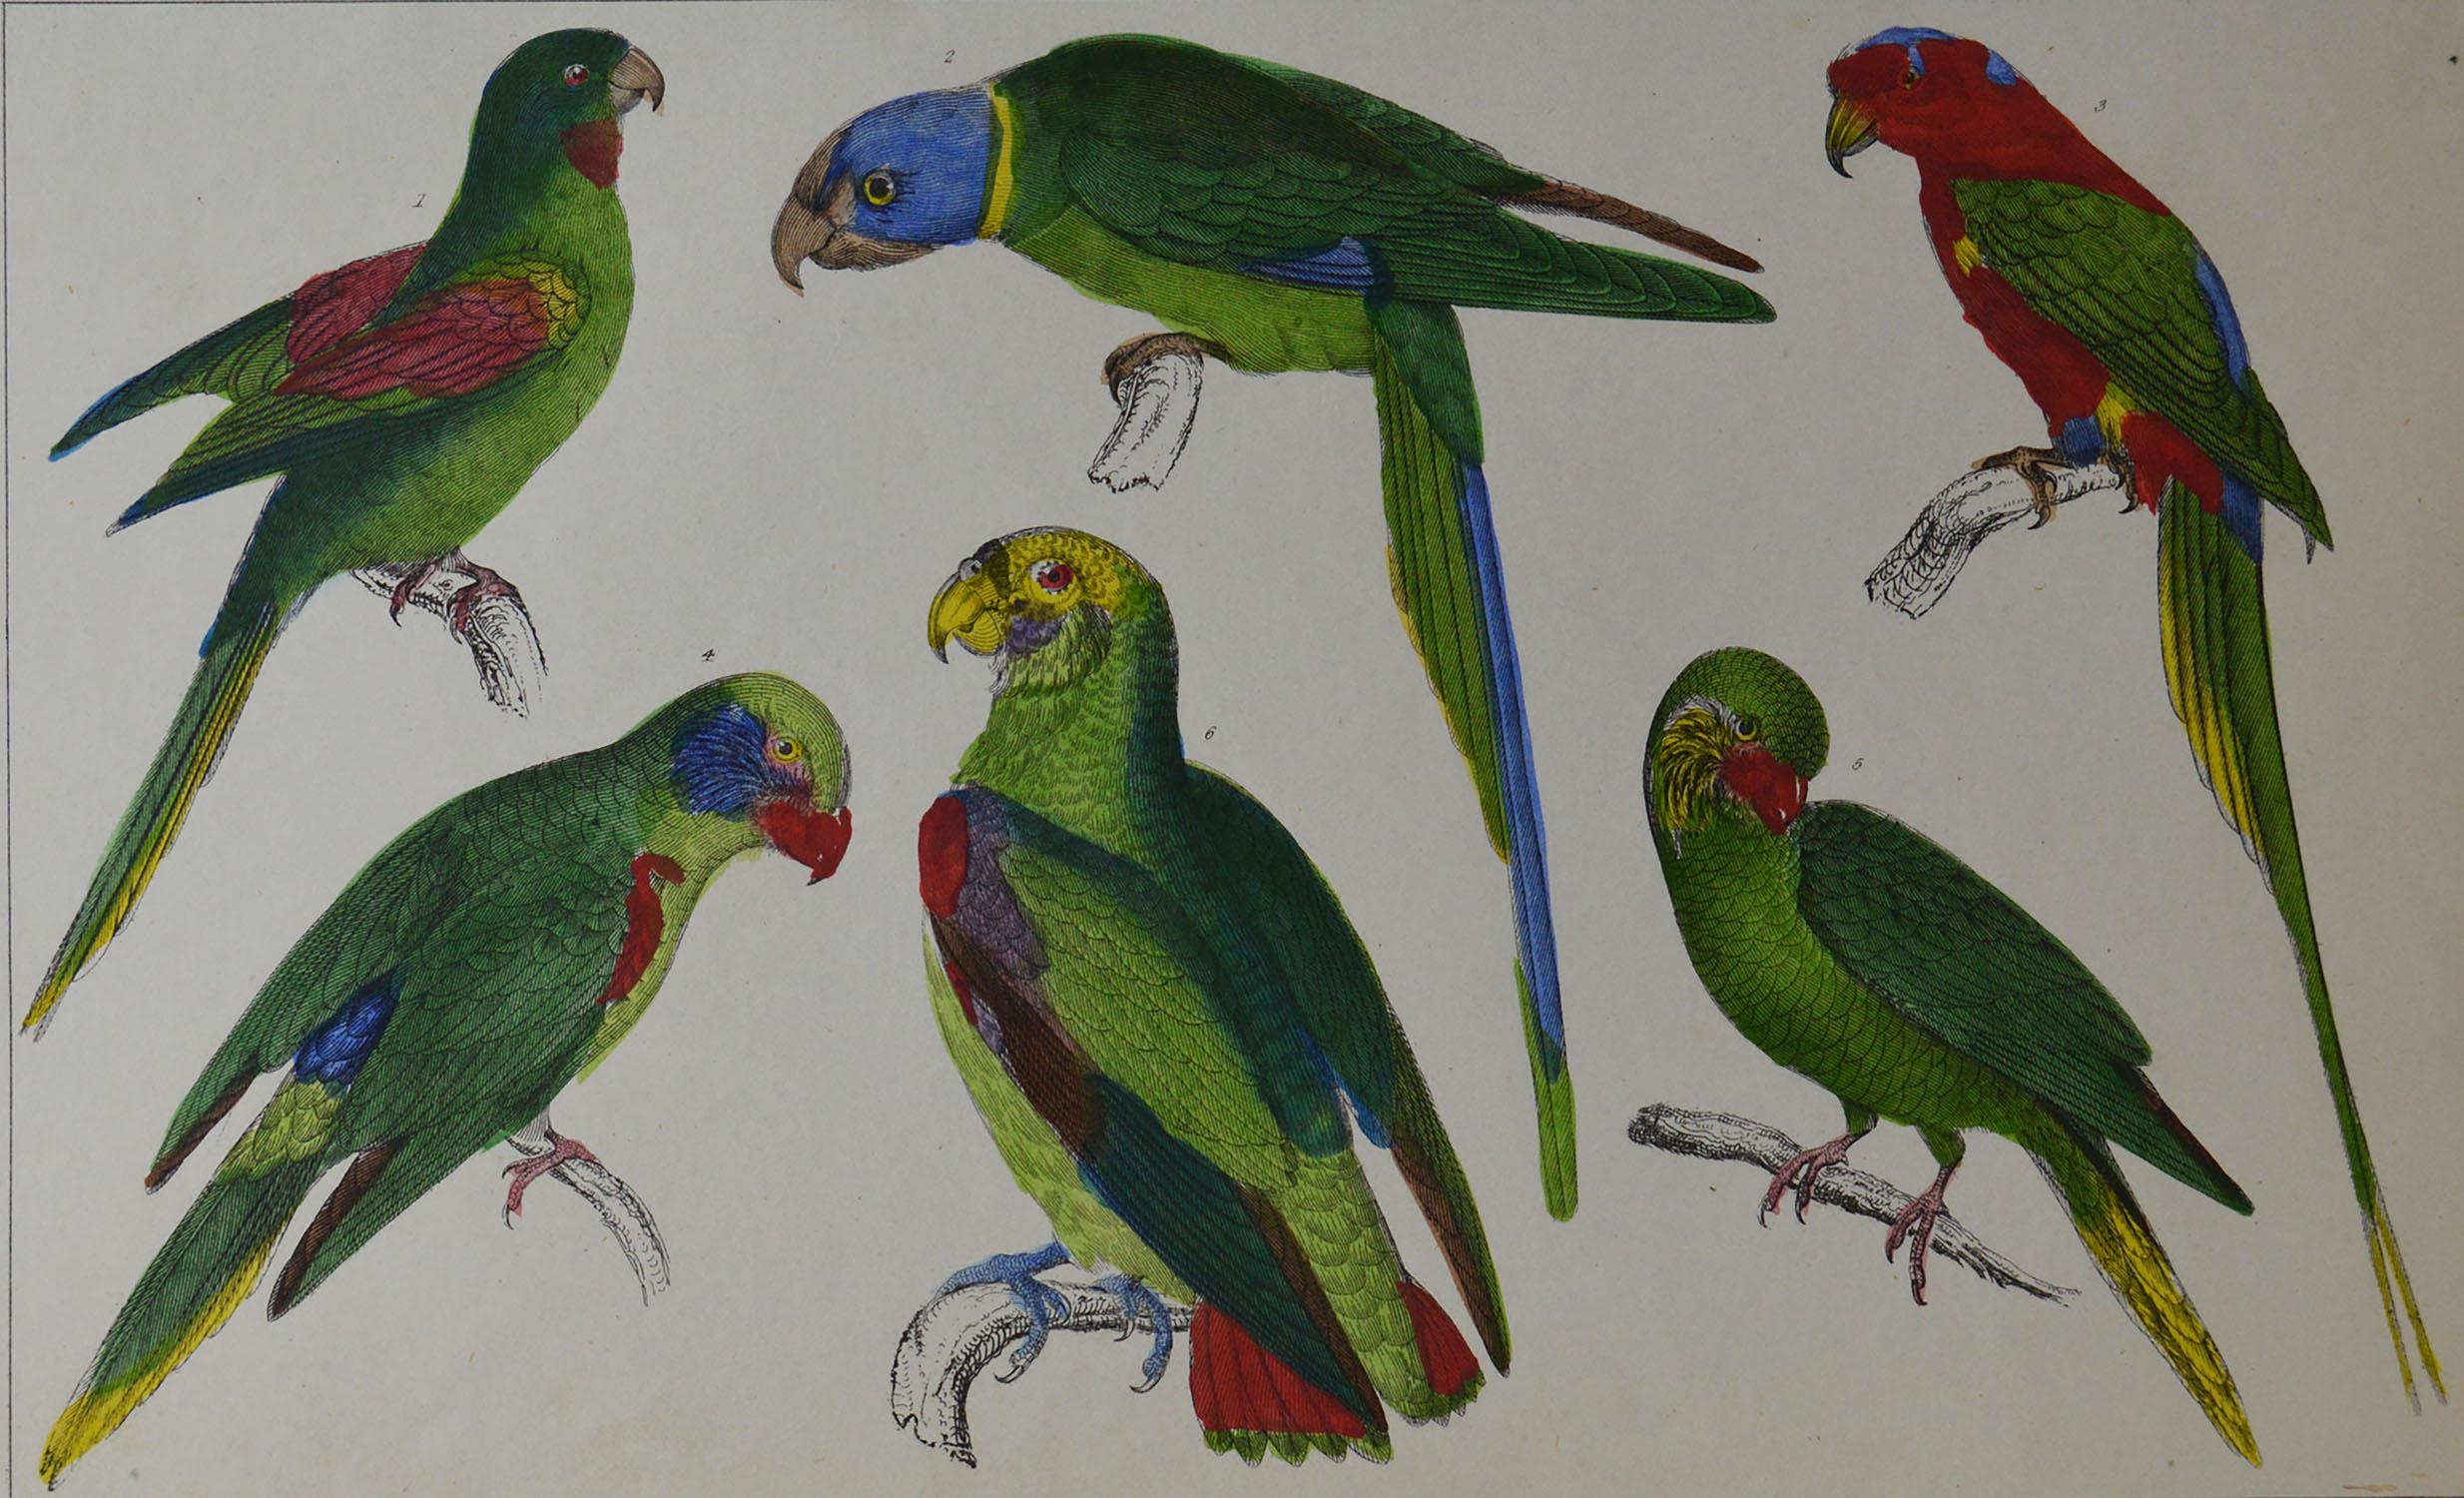 Folk Art Original Antique Print of Parrots, 1847 'Unframed'